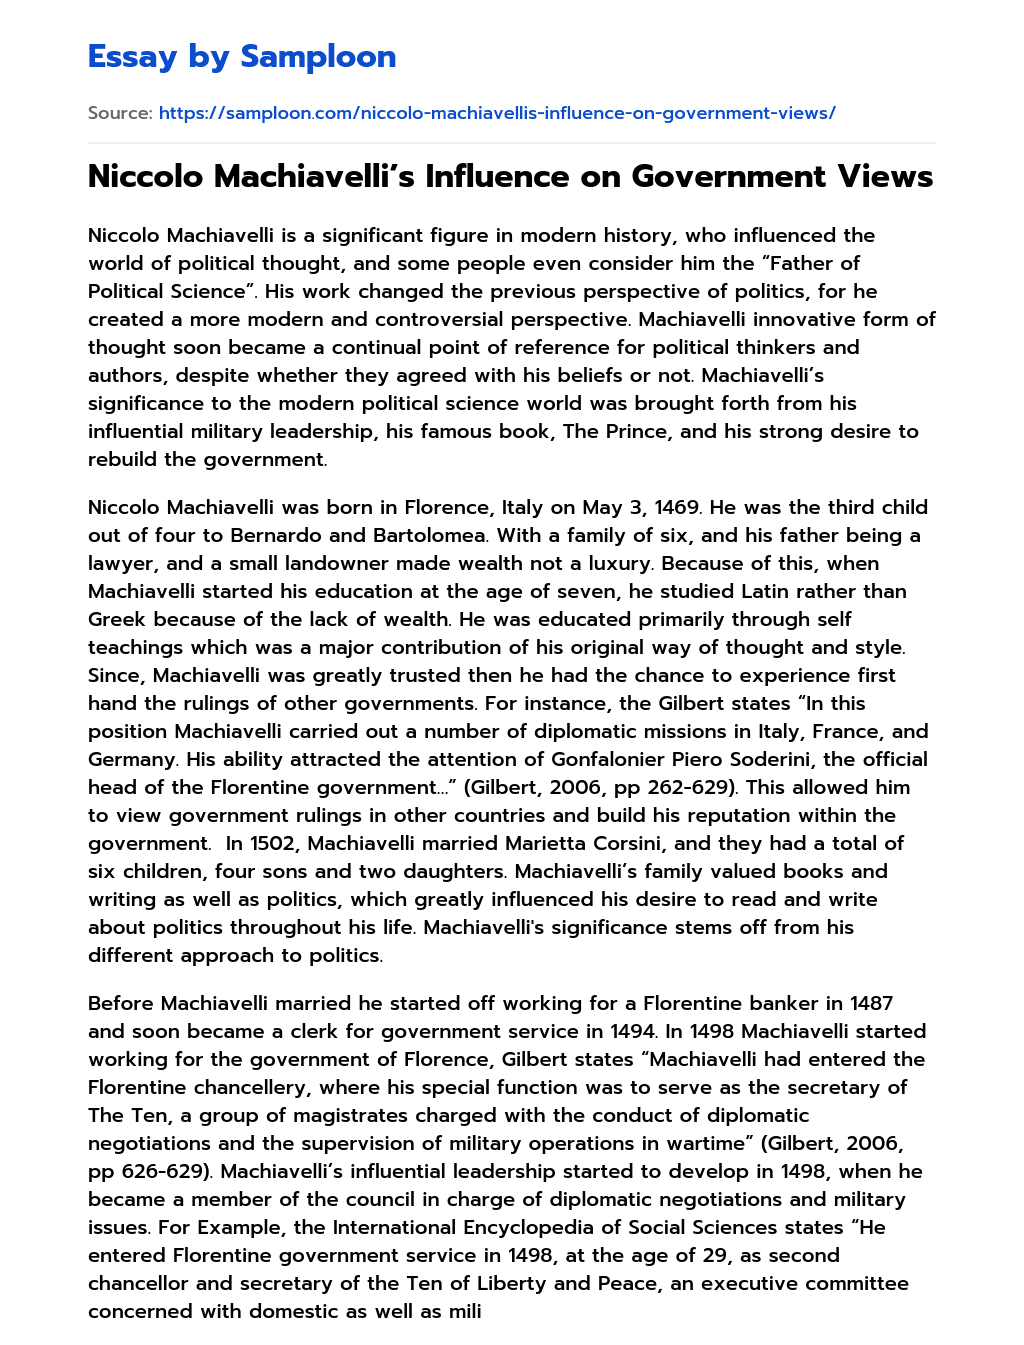 Niccolo Machiavelli’s Influence on Government Views essay